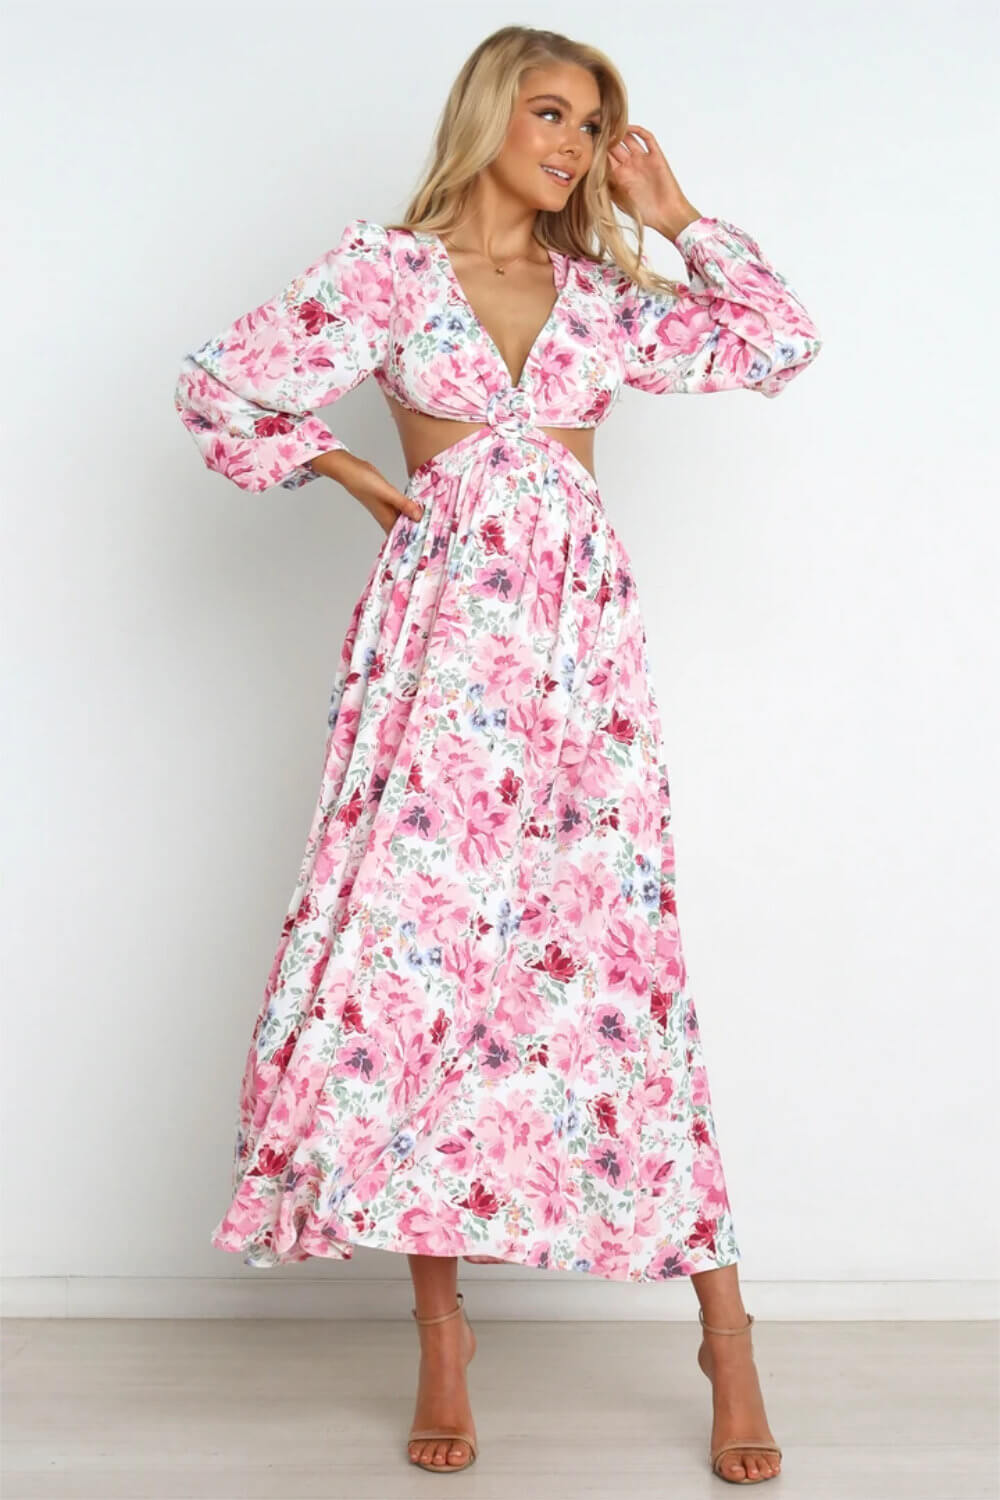 Classy Honeymoon Outfits Elegant Honeymoon Dresses Pink Floral Print Dress 2